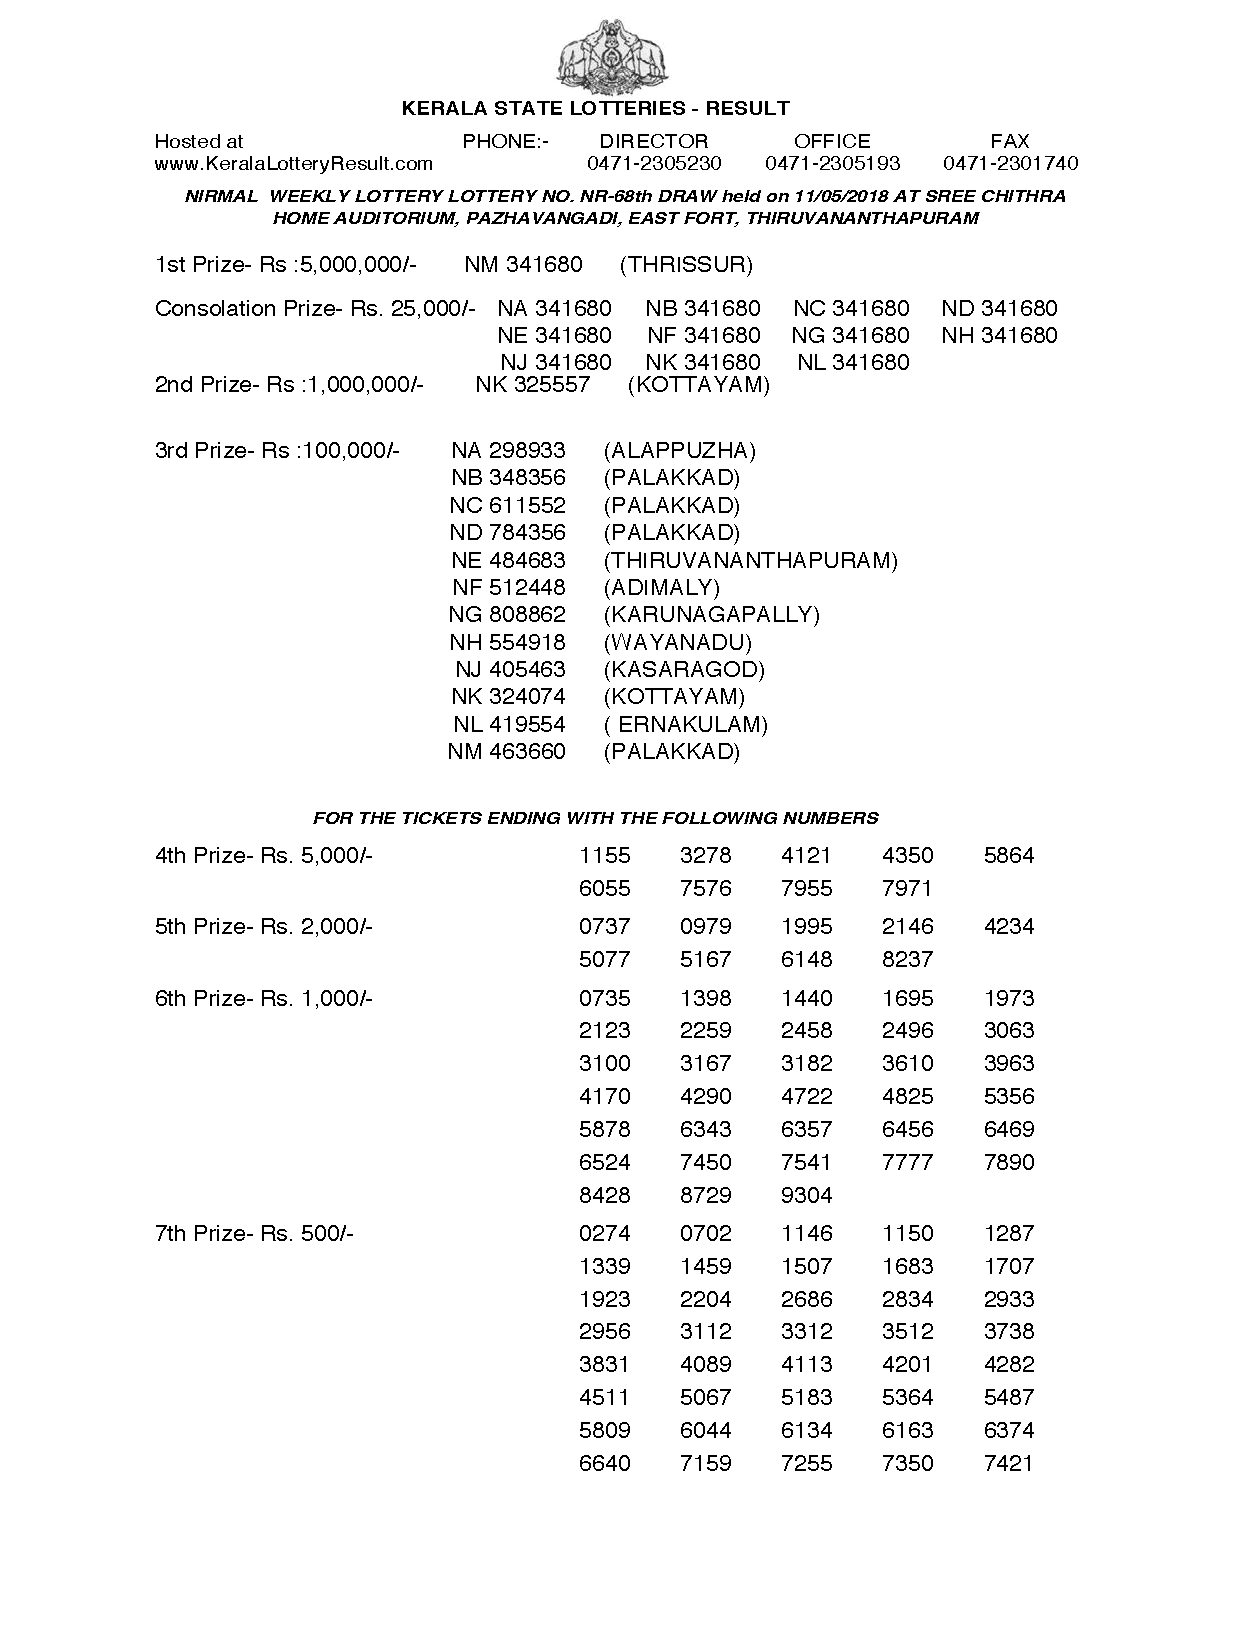 Nirmal NR68 Kerala Lottery Results Screenshot: Page 1